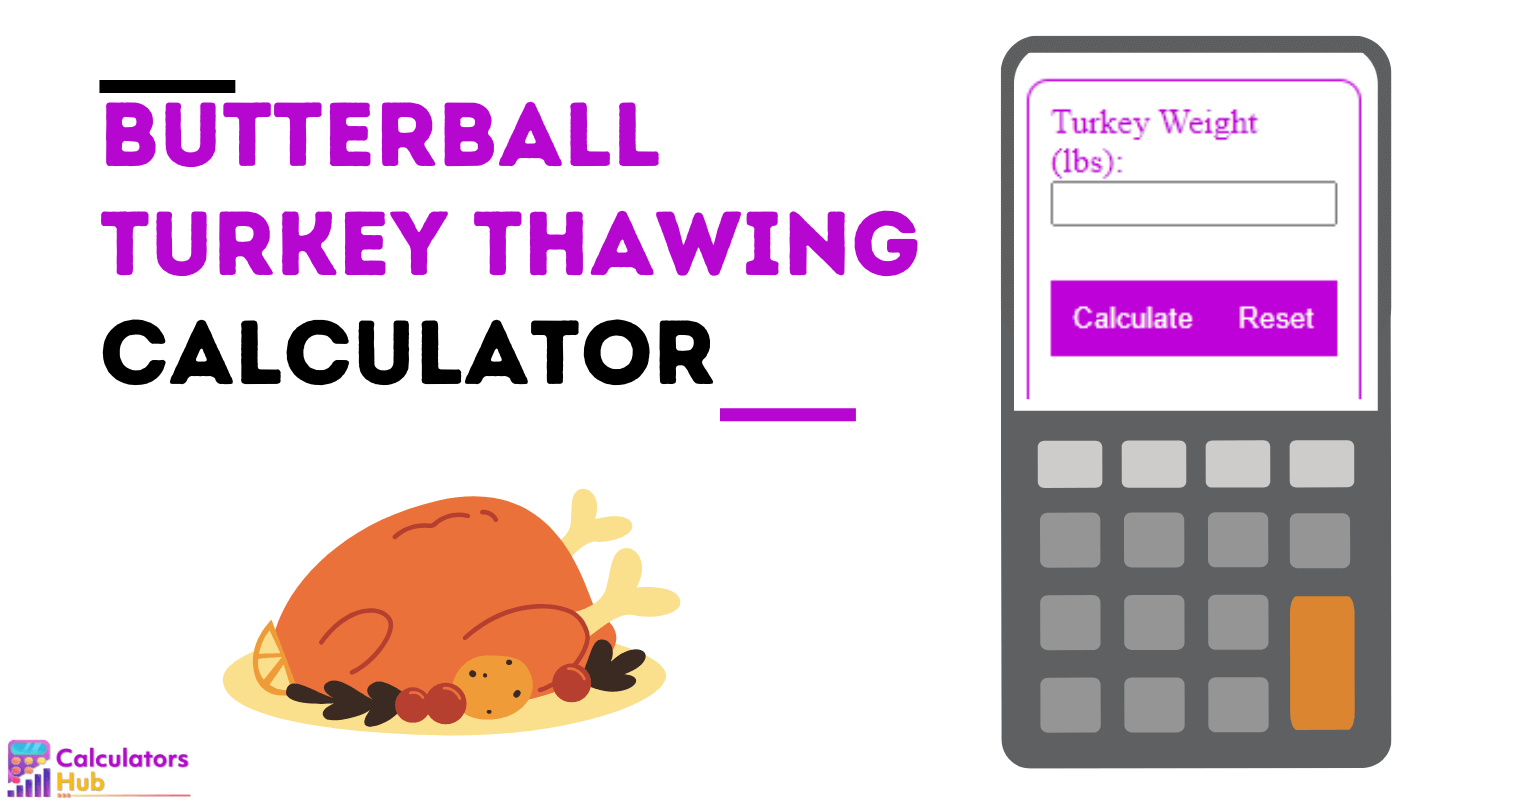 Butterball Turkey Thawing Calculator